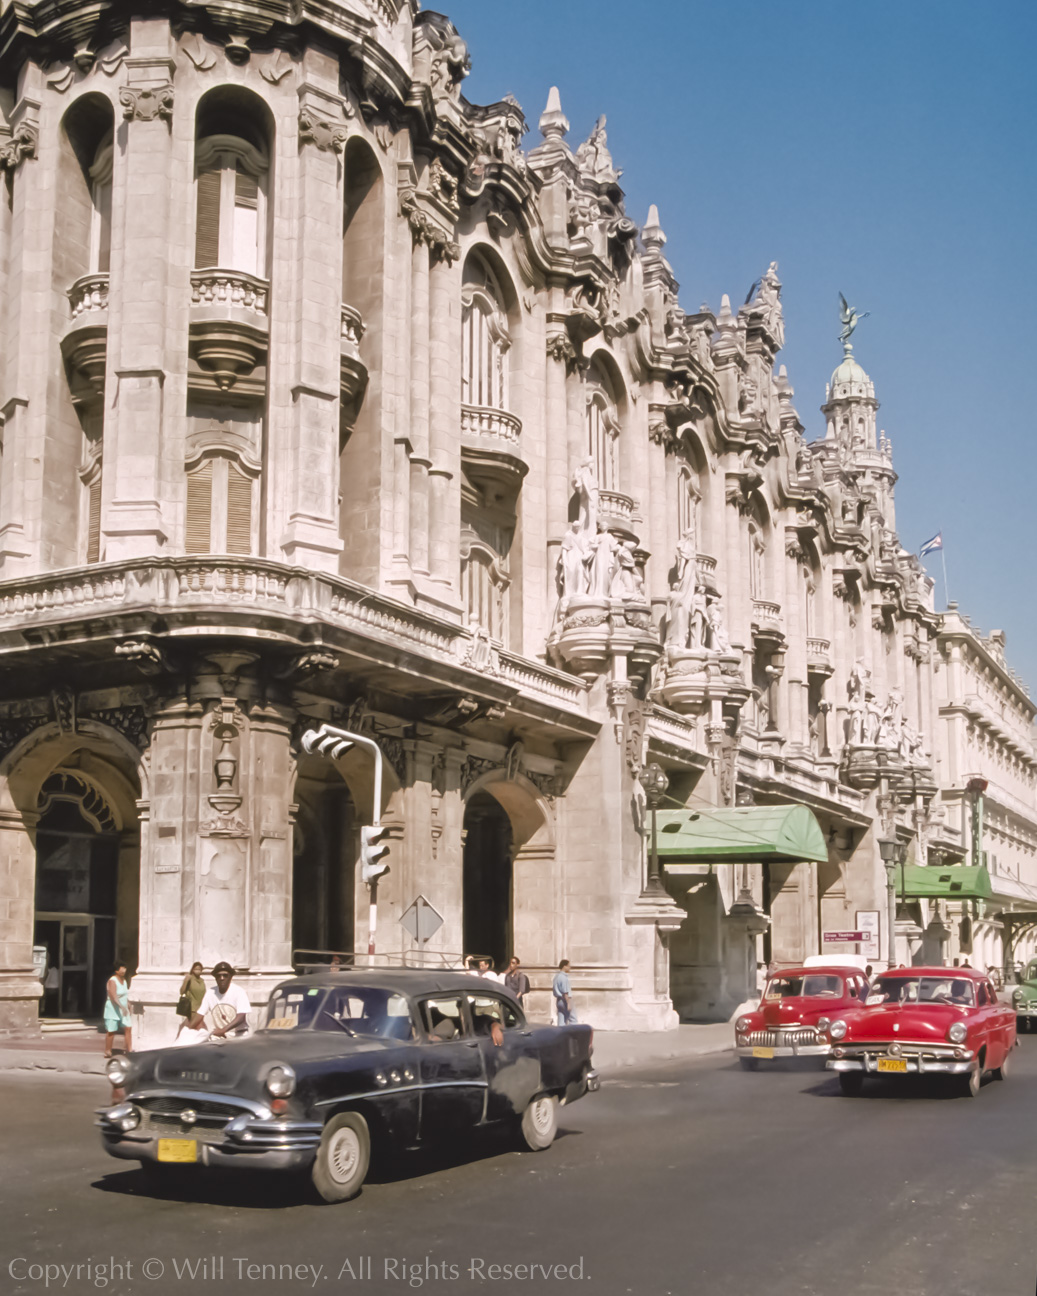 Gran Teatro de la Habana: Photograph by Will Tenney